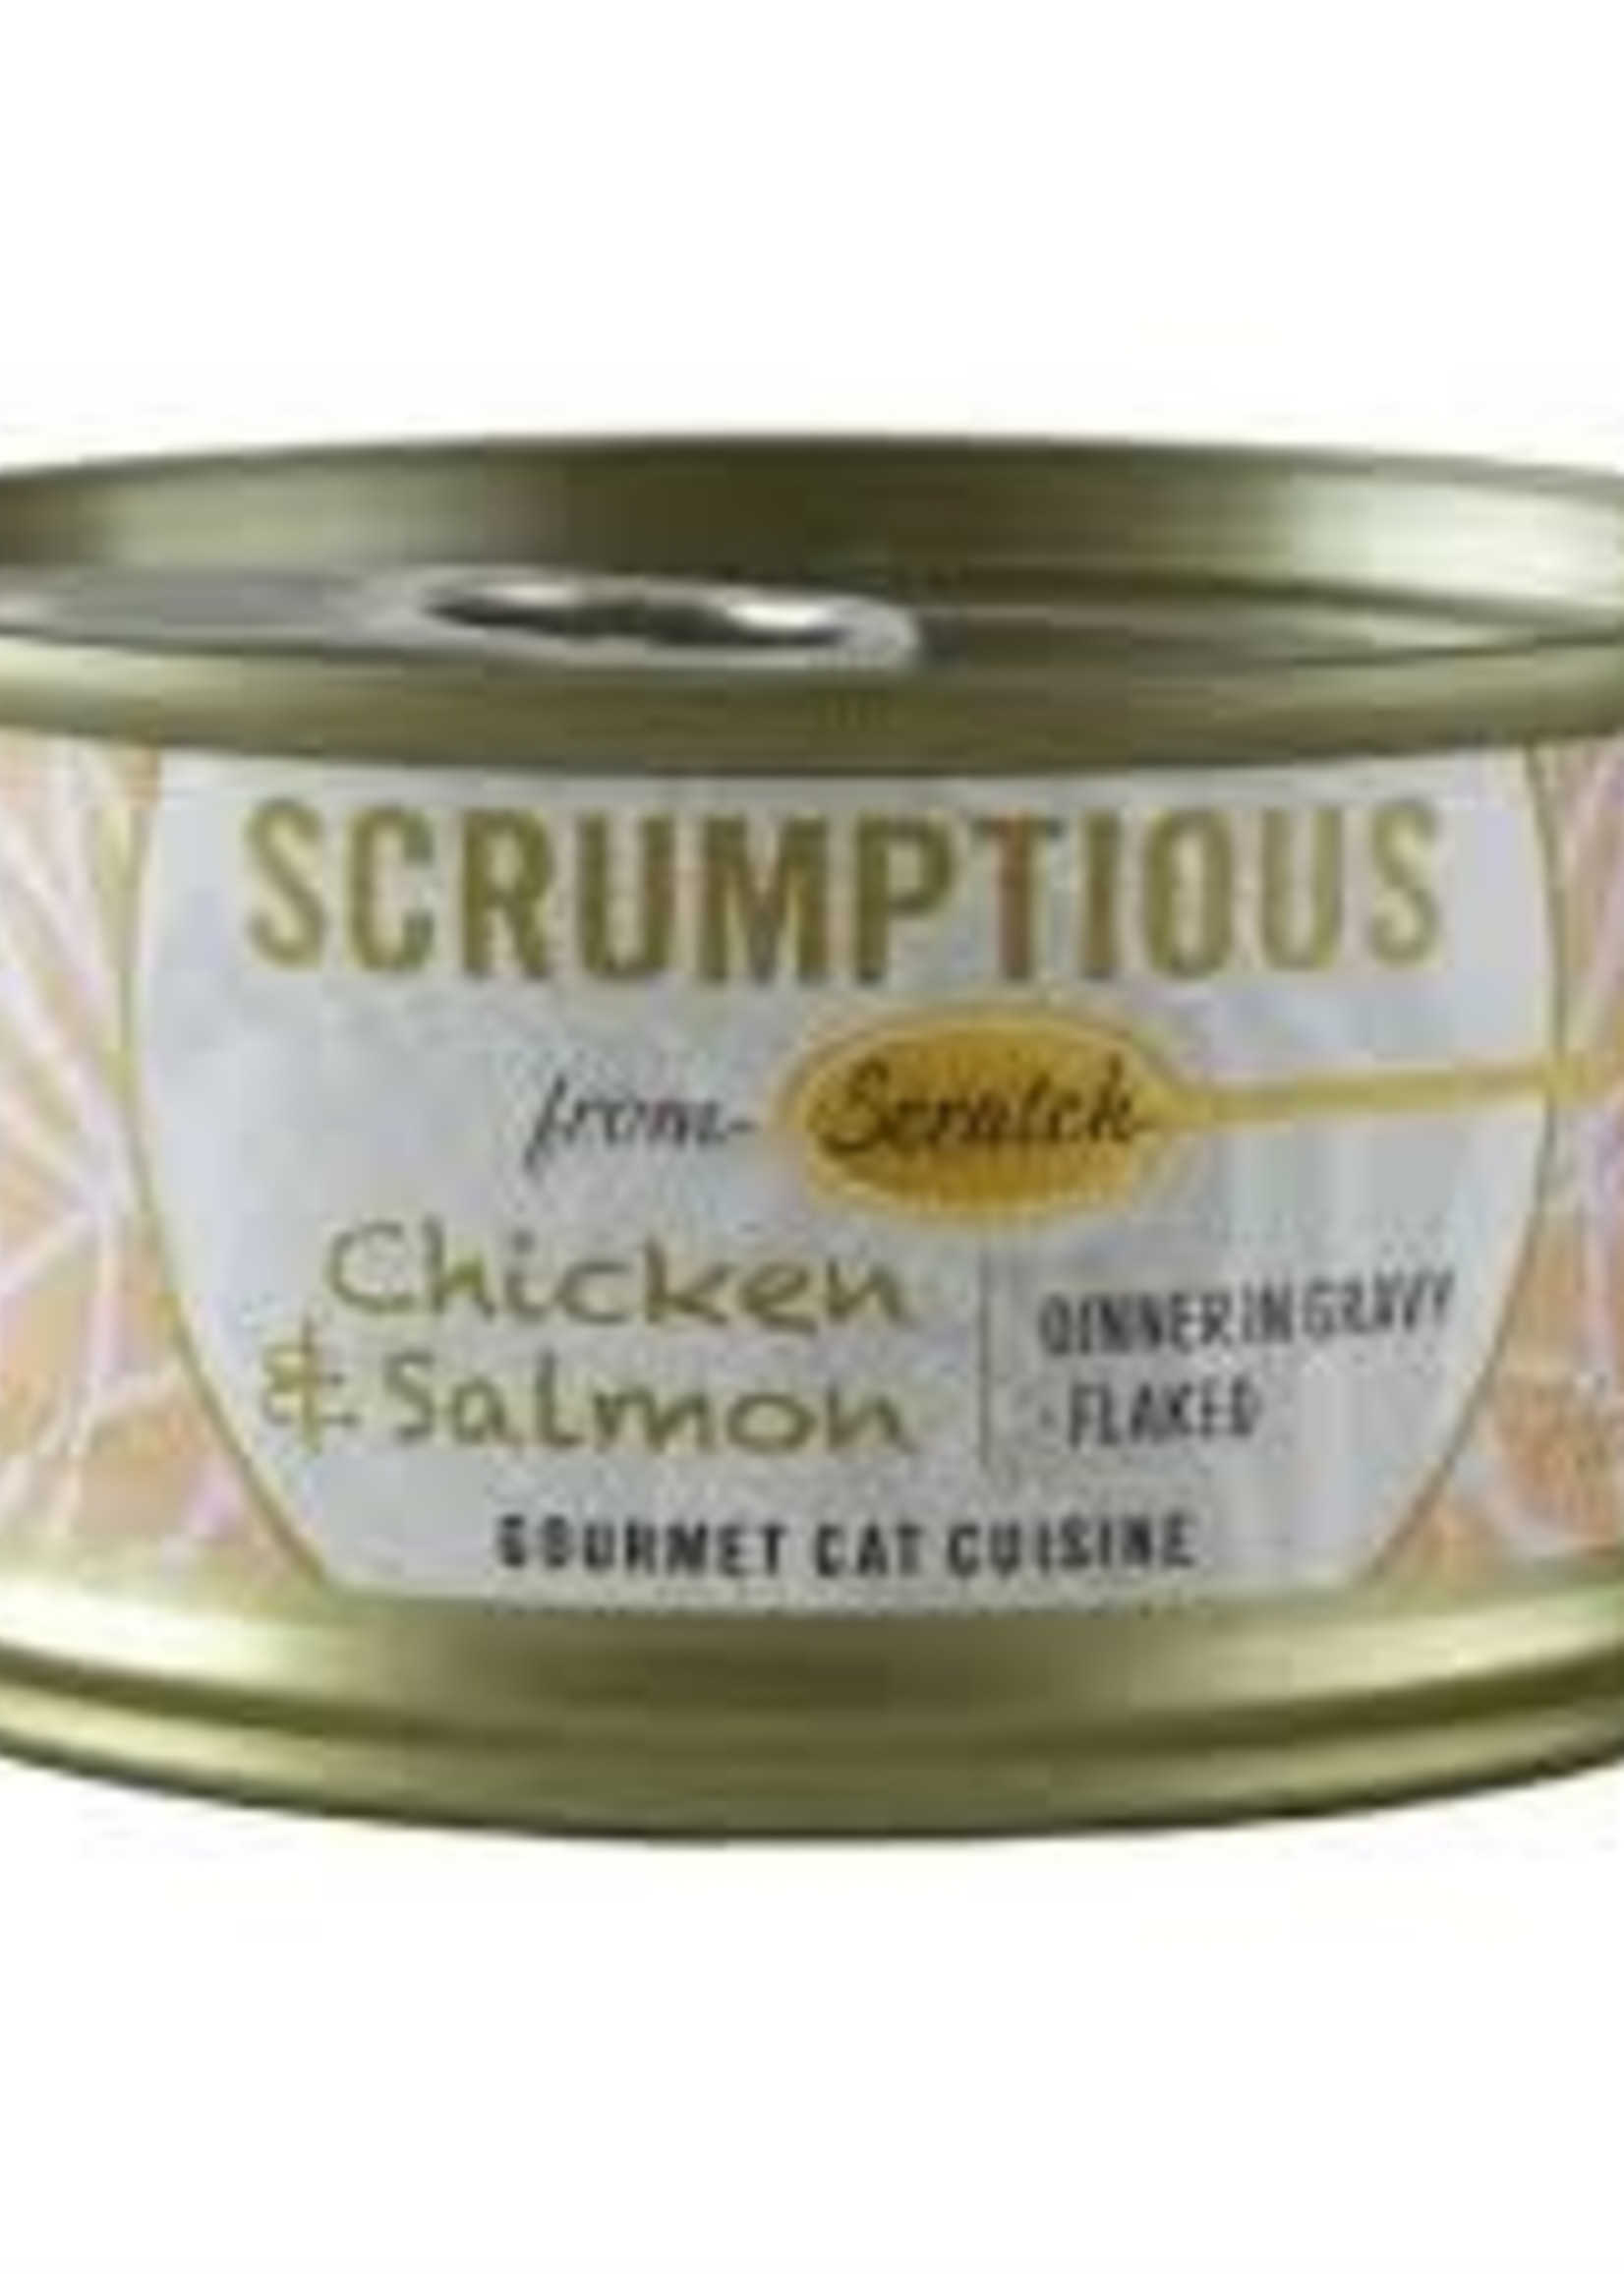 Scumptious Scrumptious Cat Food-Chicken & Salmon 2.8OZ